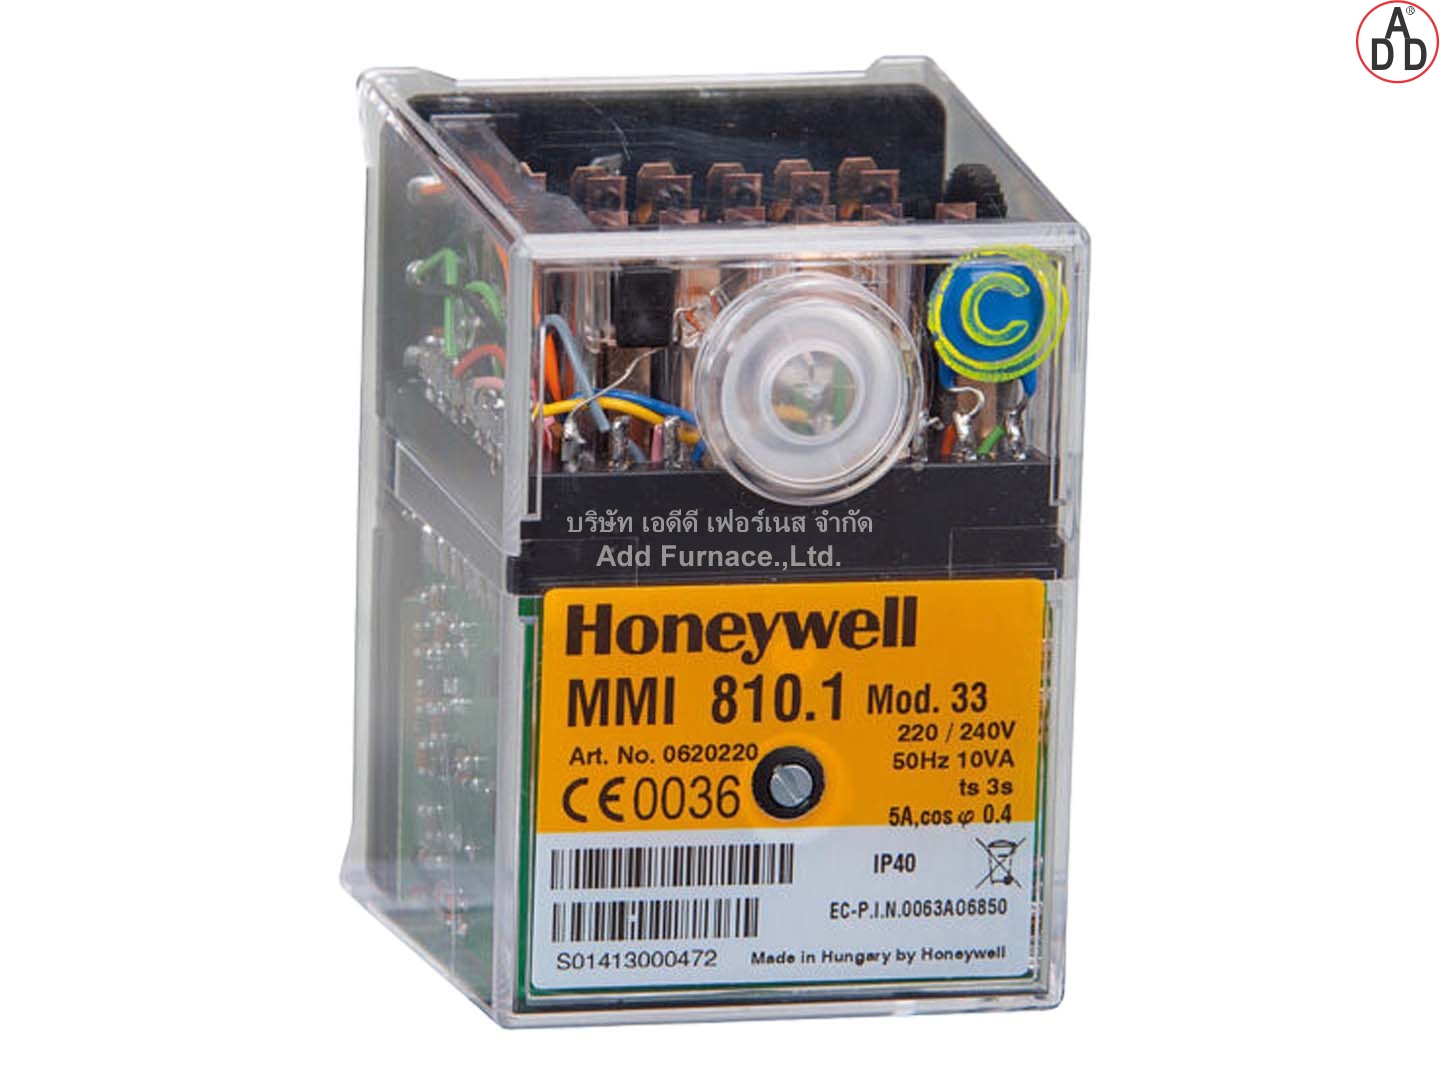 MMI 810.1 Mod.33 (2)